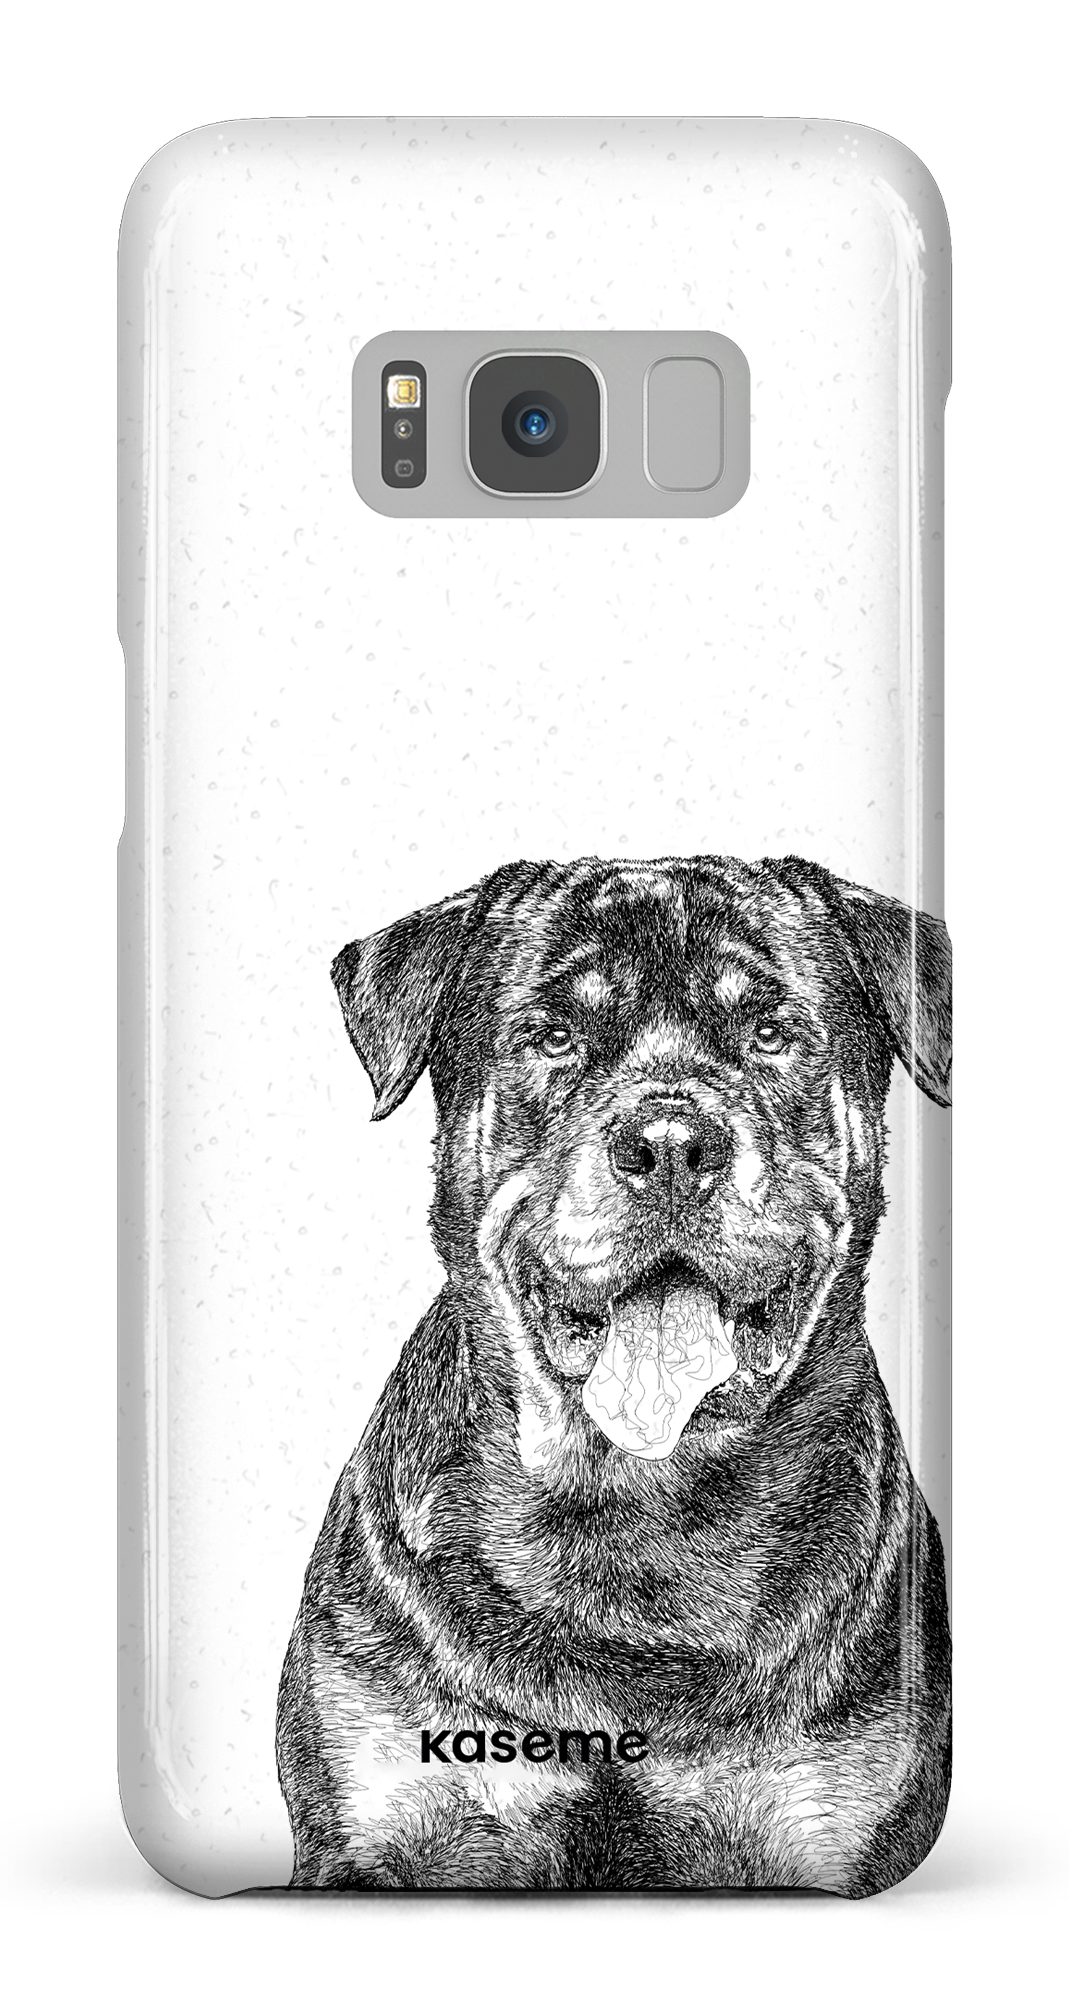 Rottweiler - Galaxy S8